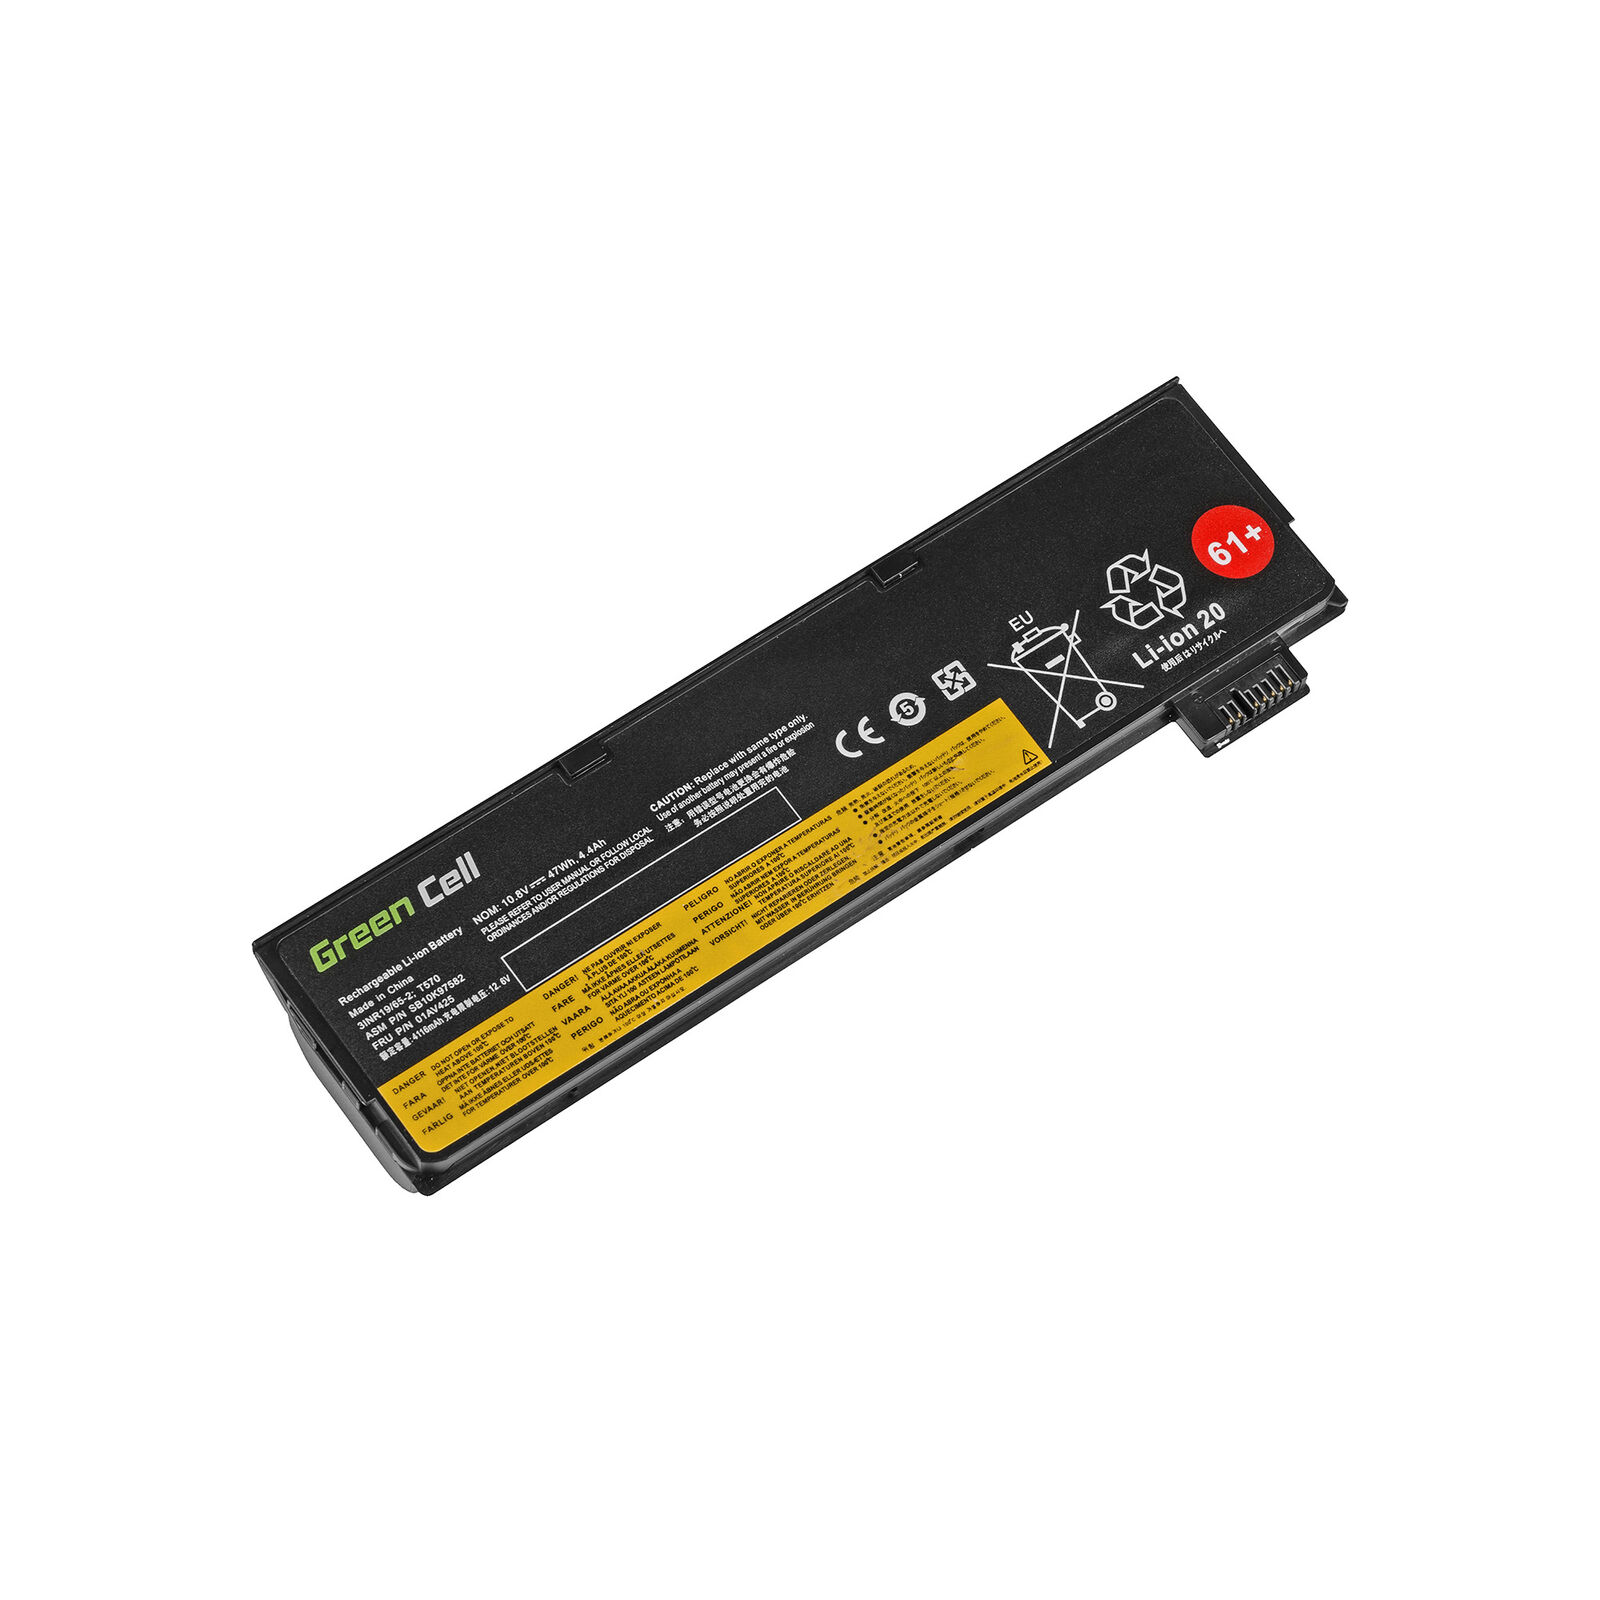 LENOVO THINKPAD kompatibelt batterier 61+ NEU T470 / T570 kompatibelt batterier